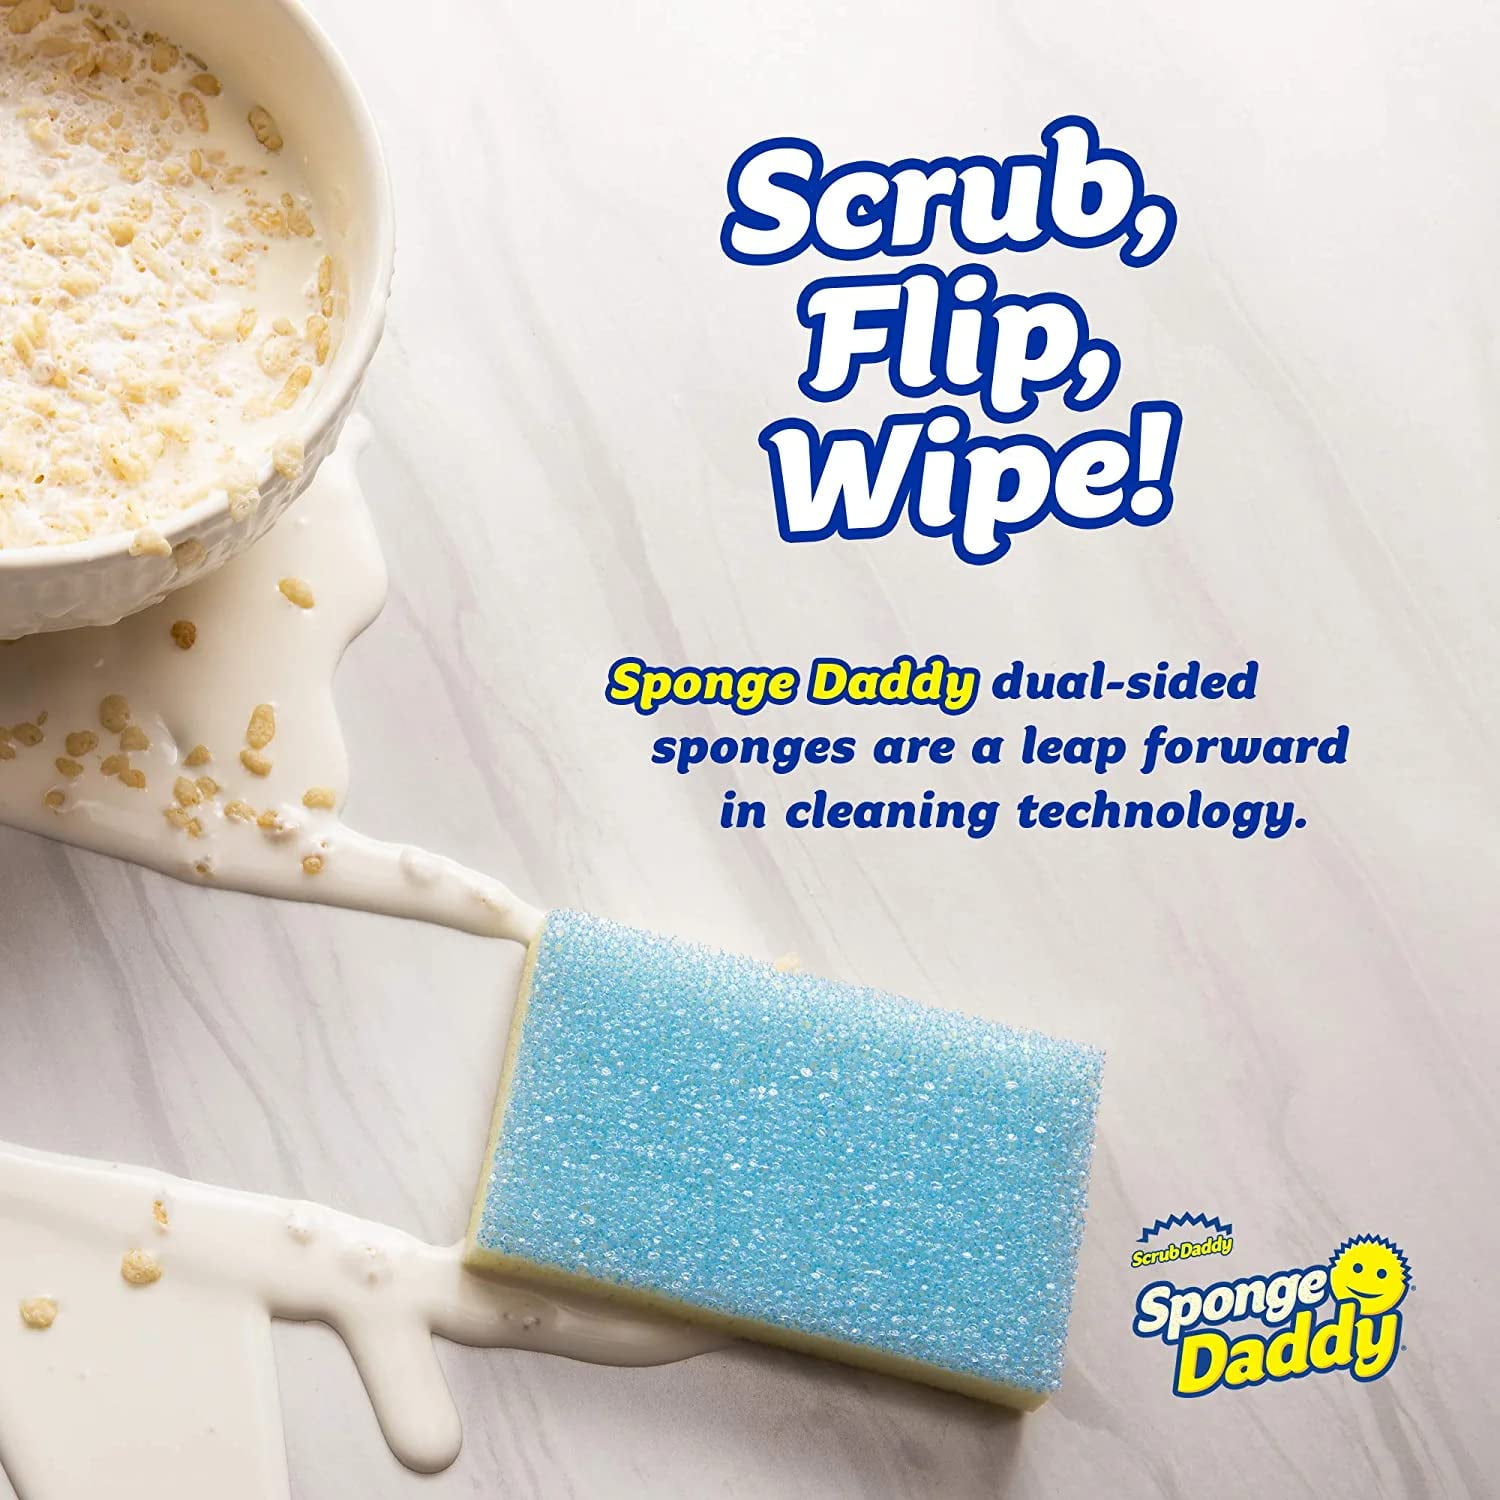 Scrub Daddy Sponge - Lemon Fresh Scent - Scratch-Free Multipurpose Dish  Sponge - BPA Free & Made with Polymer Foam - Stain & Odor Resistant Kitchen